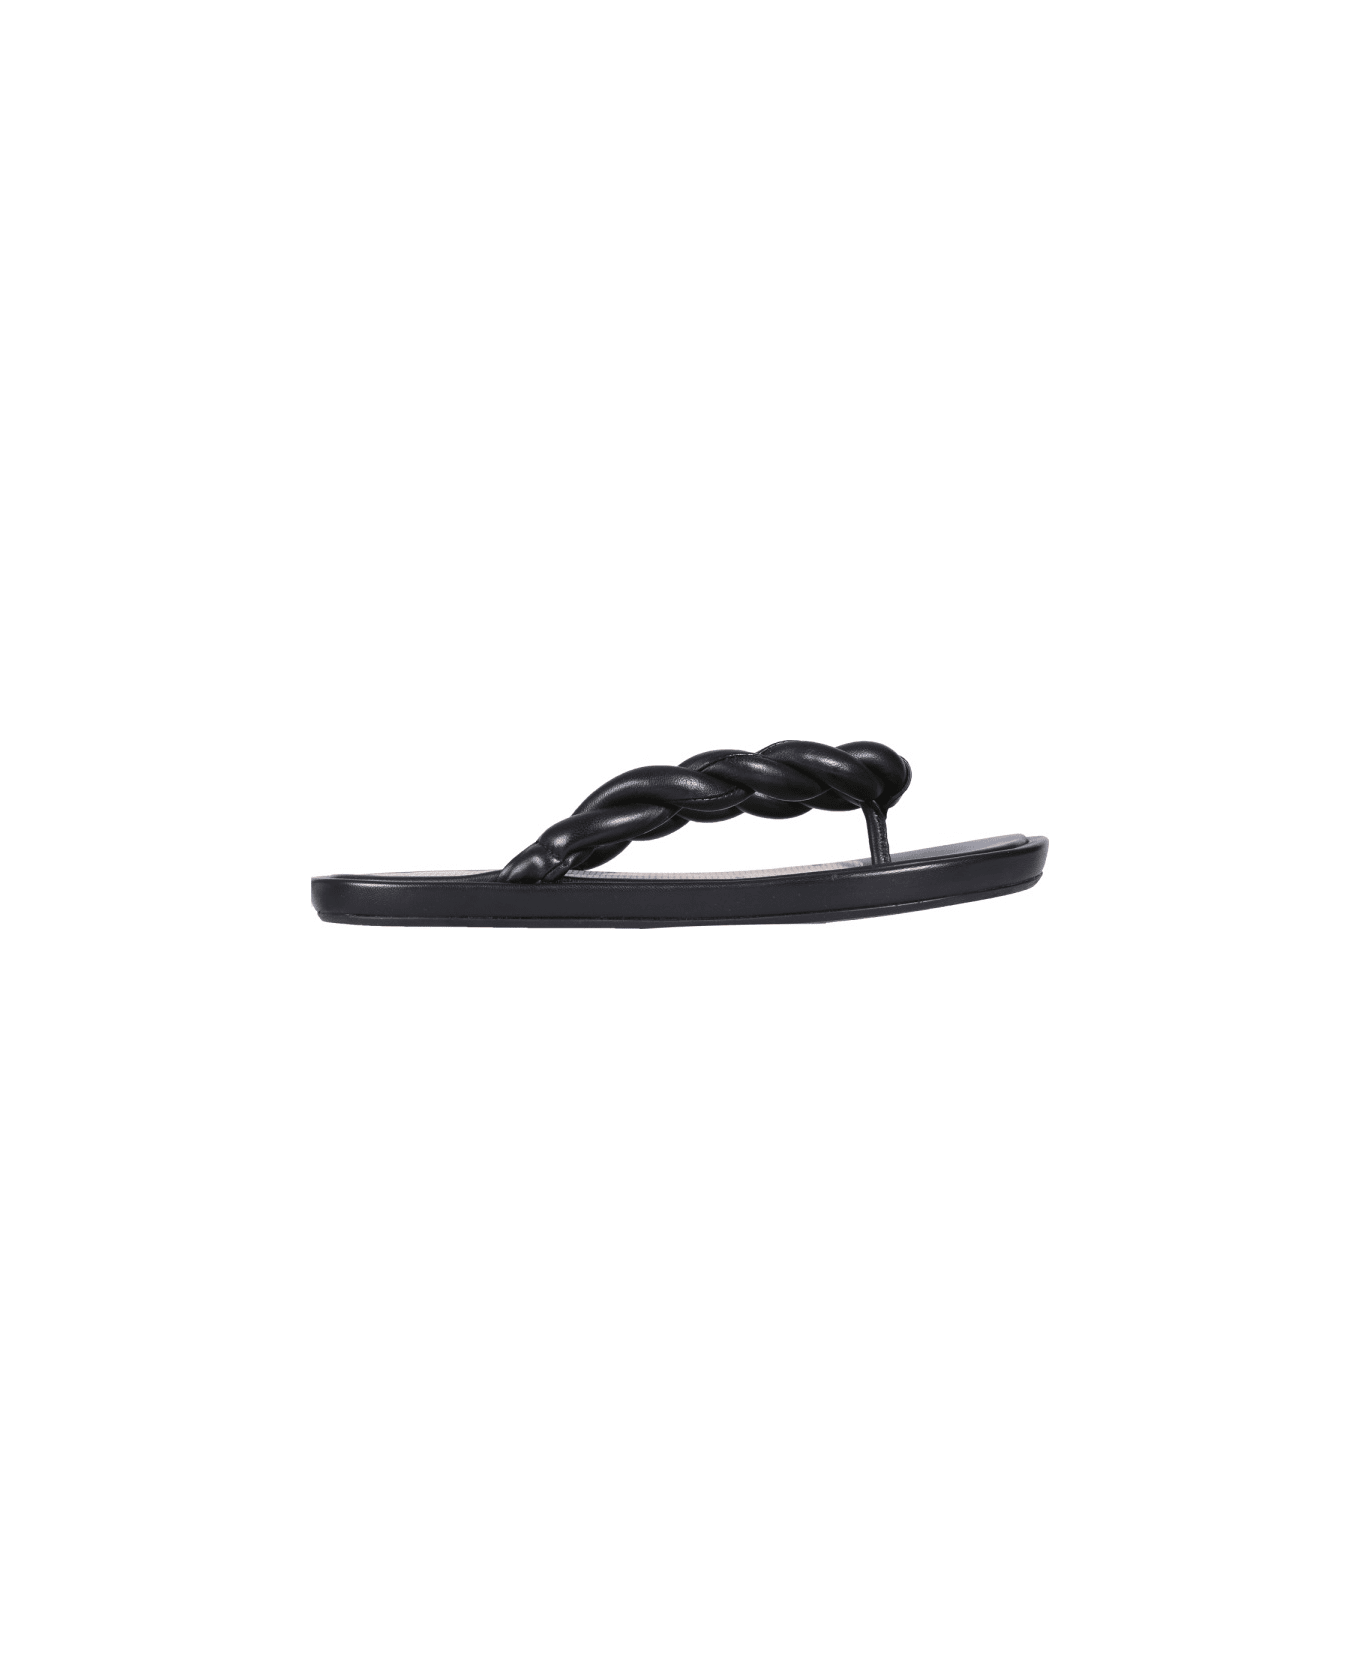 RED Valentino Leather Slide Sandals - BLACK サンダル